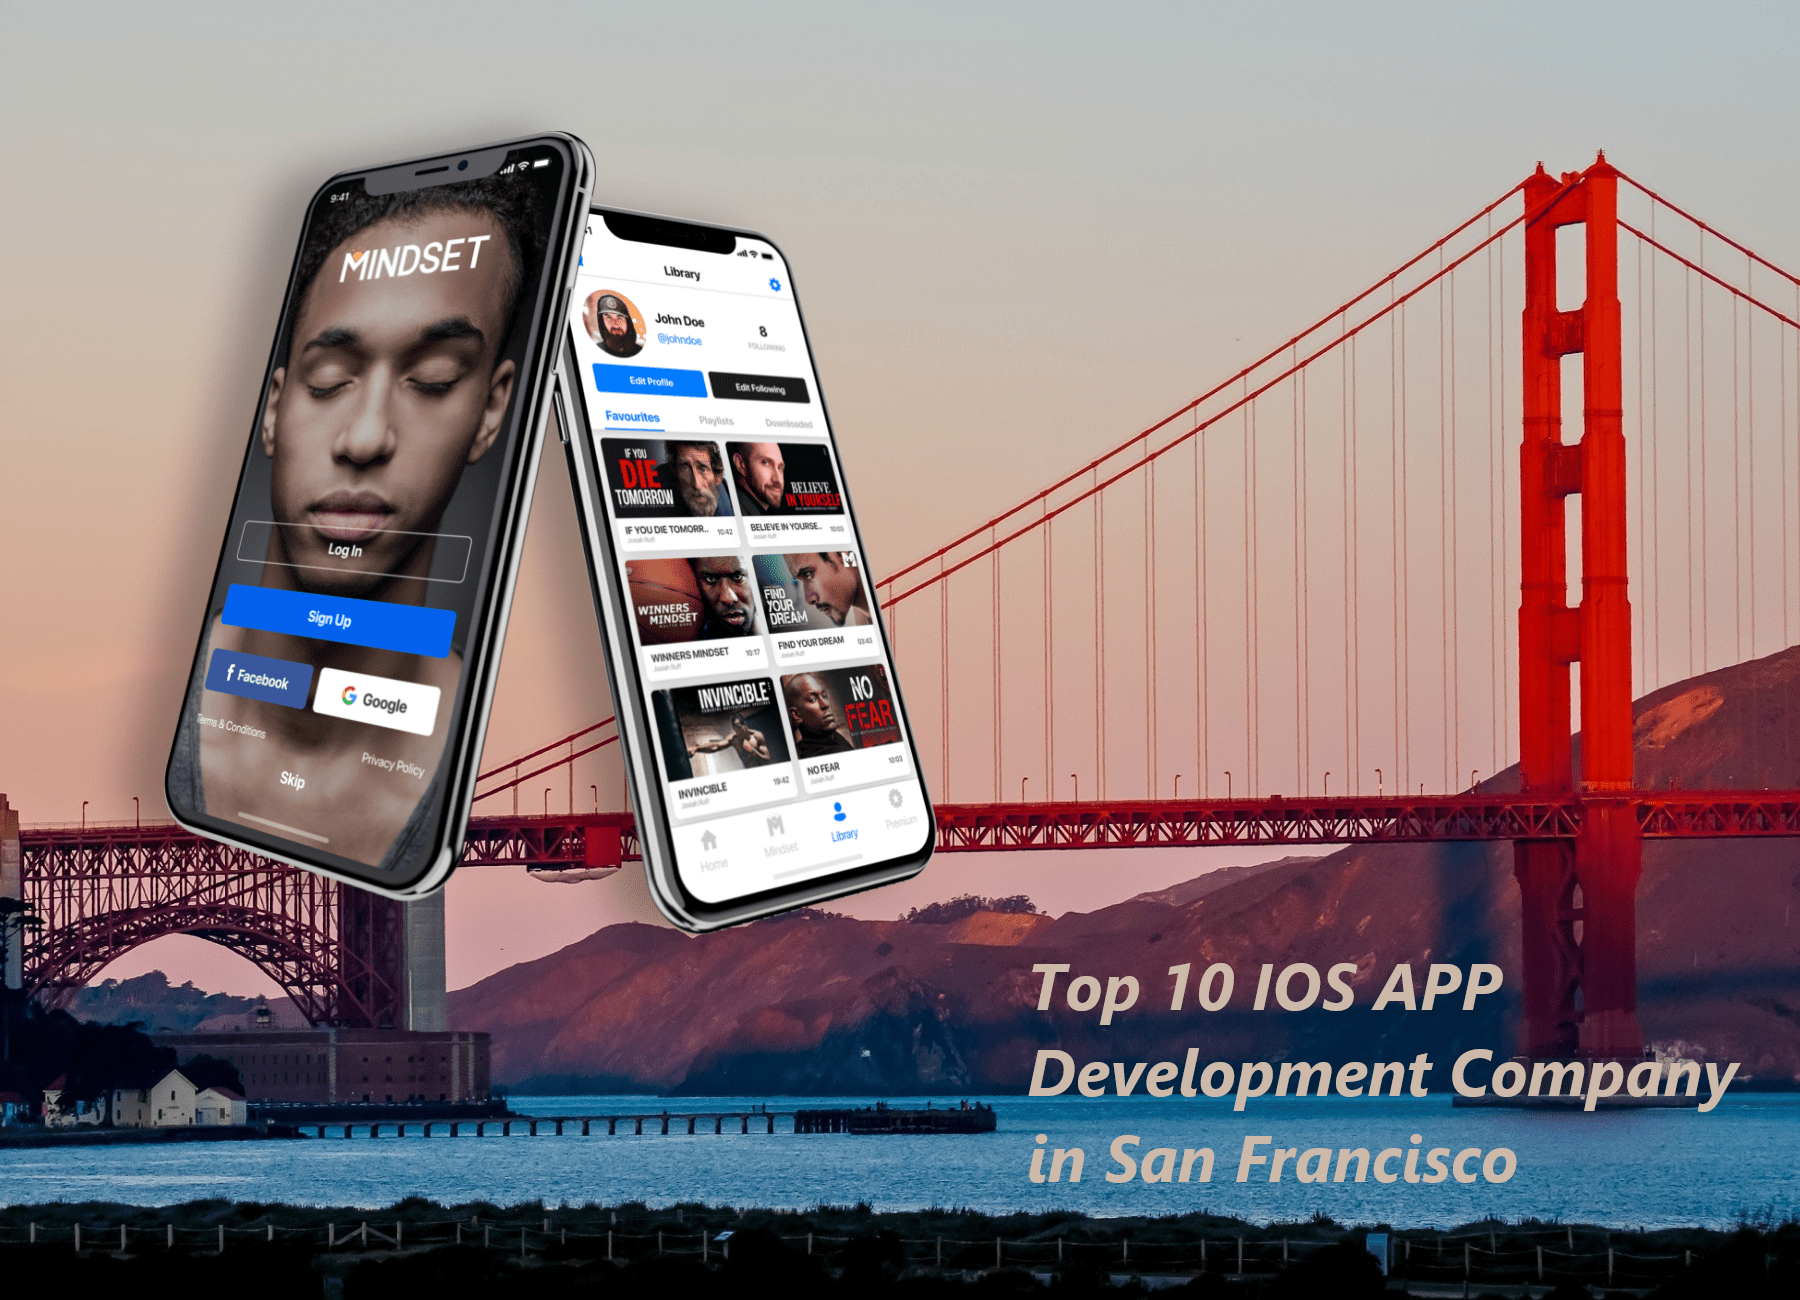 Top 10 iOS App Development Company in San Francisco